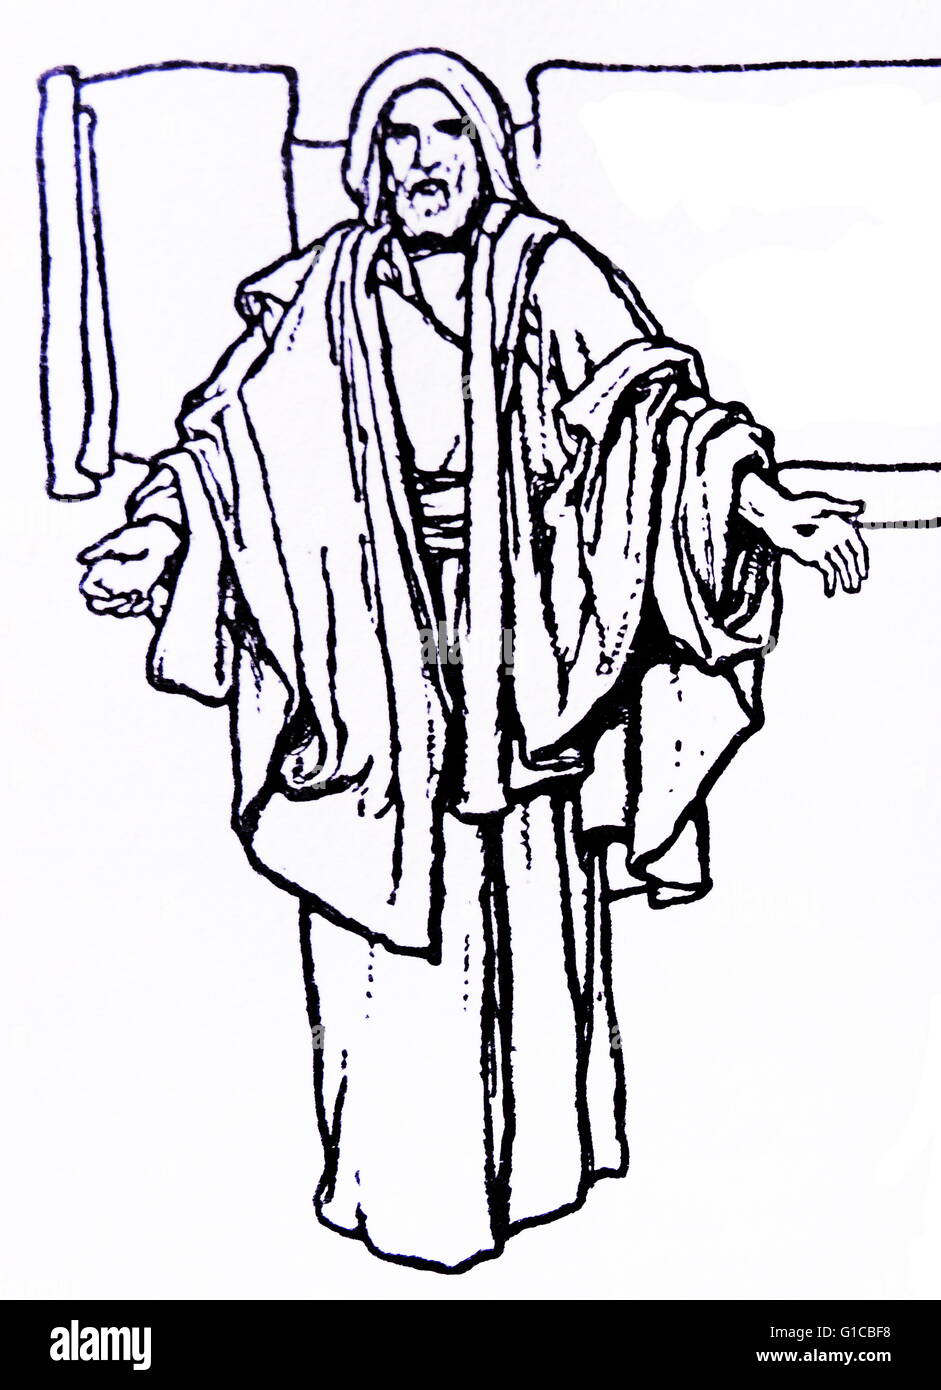 Engraving depicting Jesus Christ 'The Saviour of the World' Stock Photo